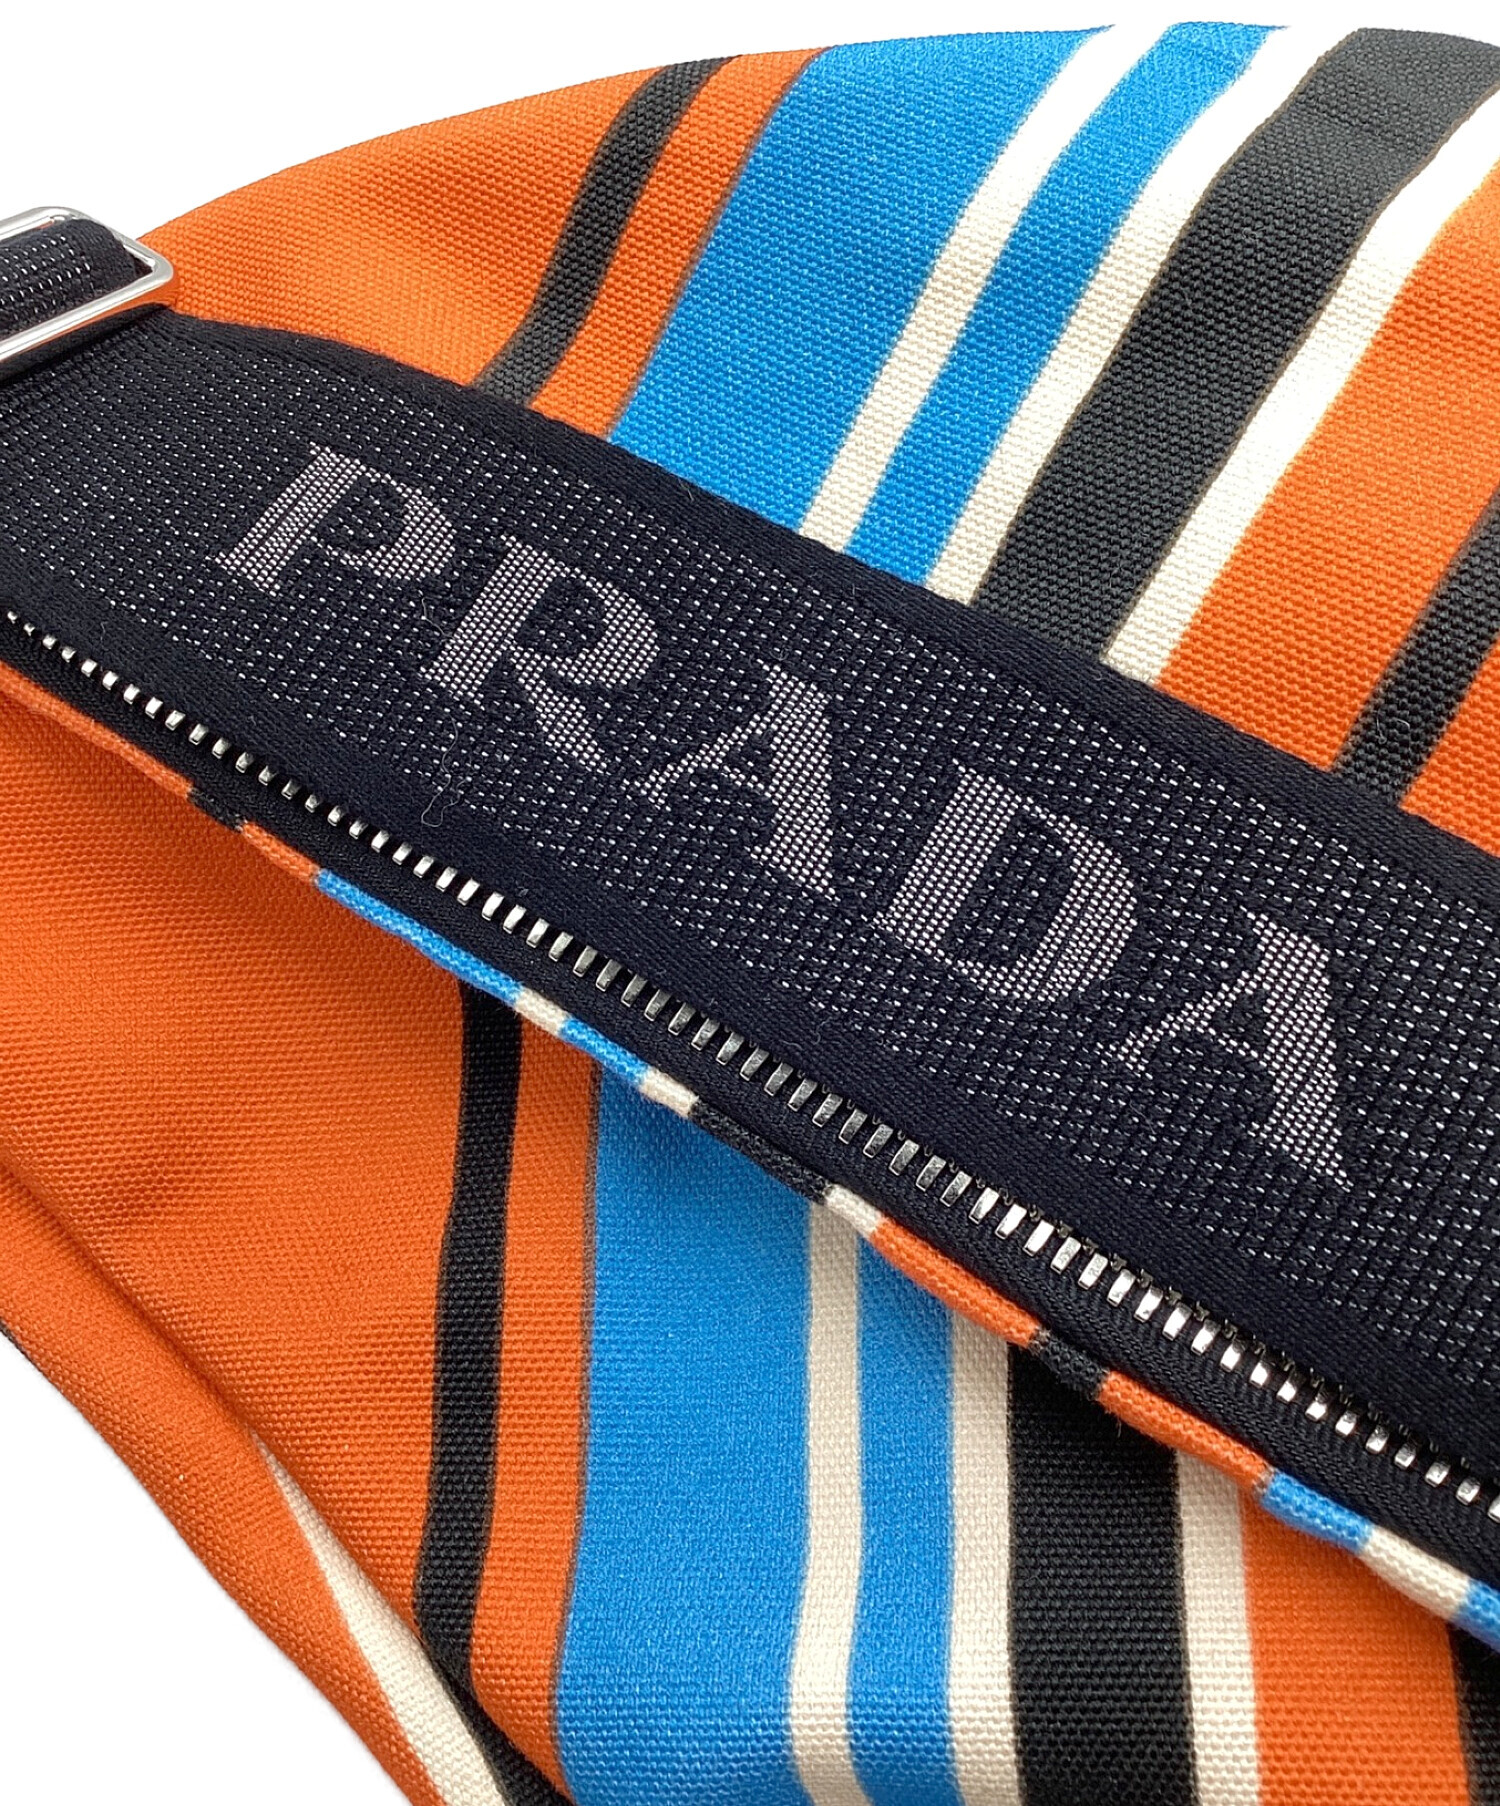 PRADA (プラダ) ストライプトライアングルショルダーバッグ オレンジ